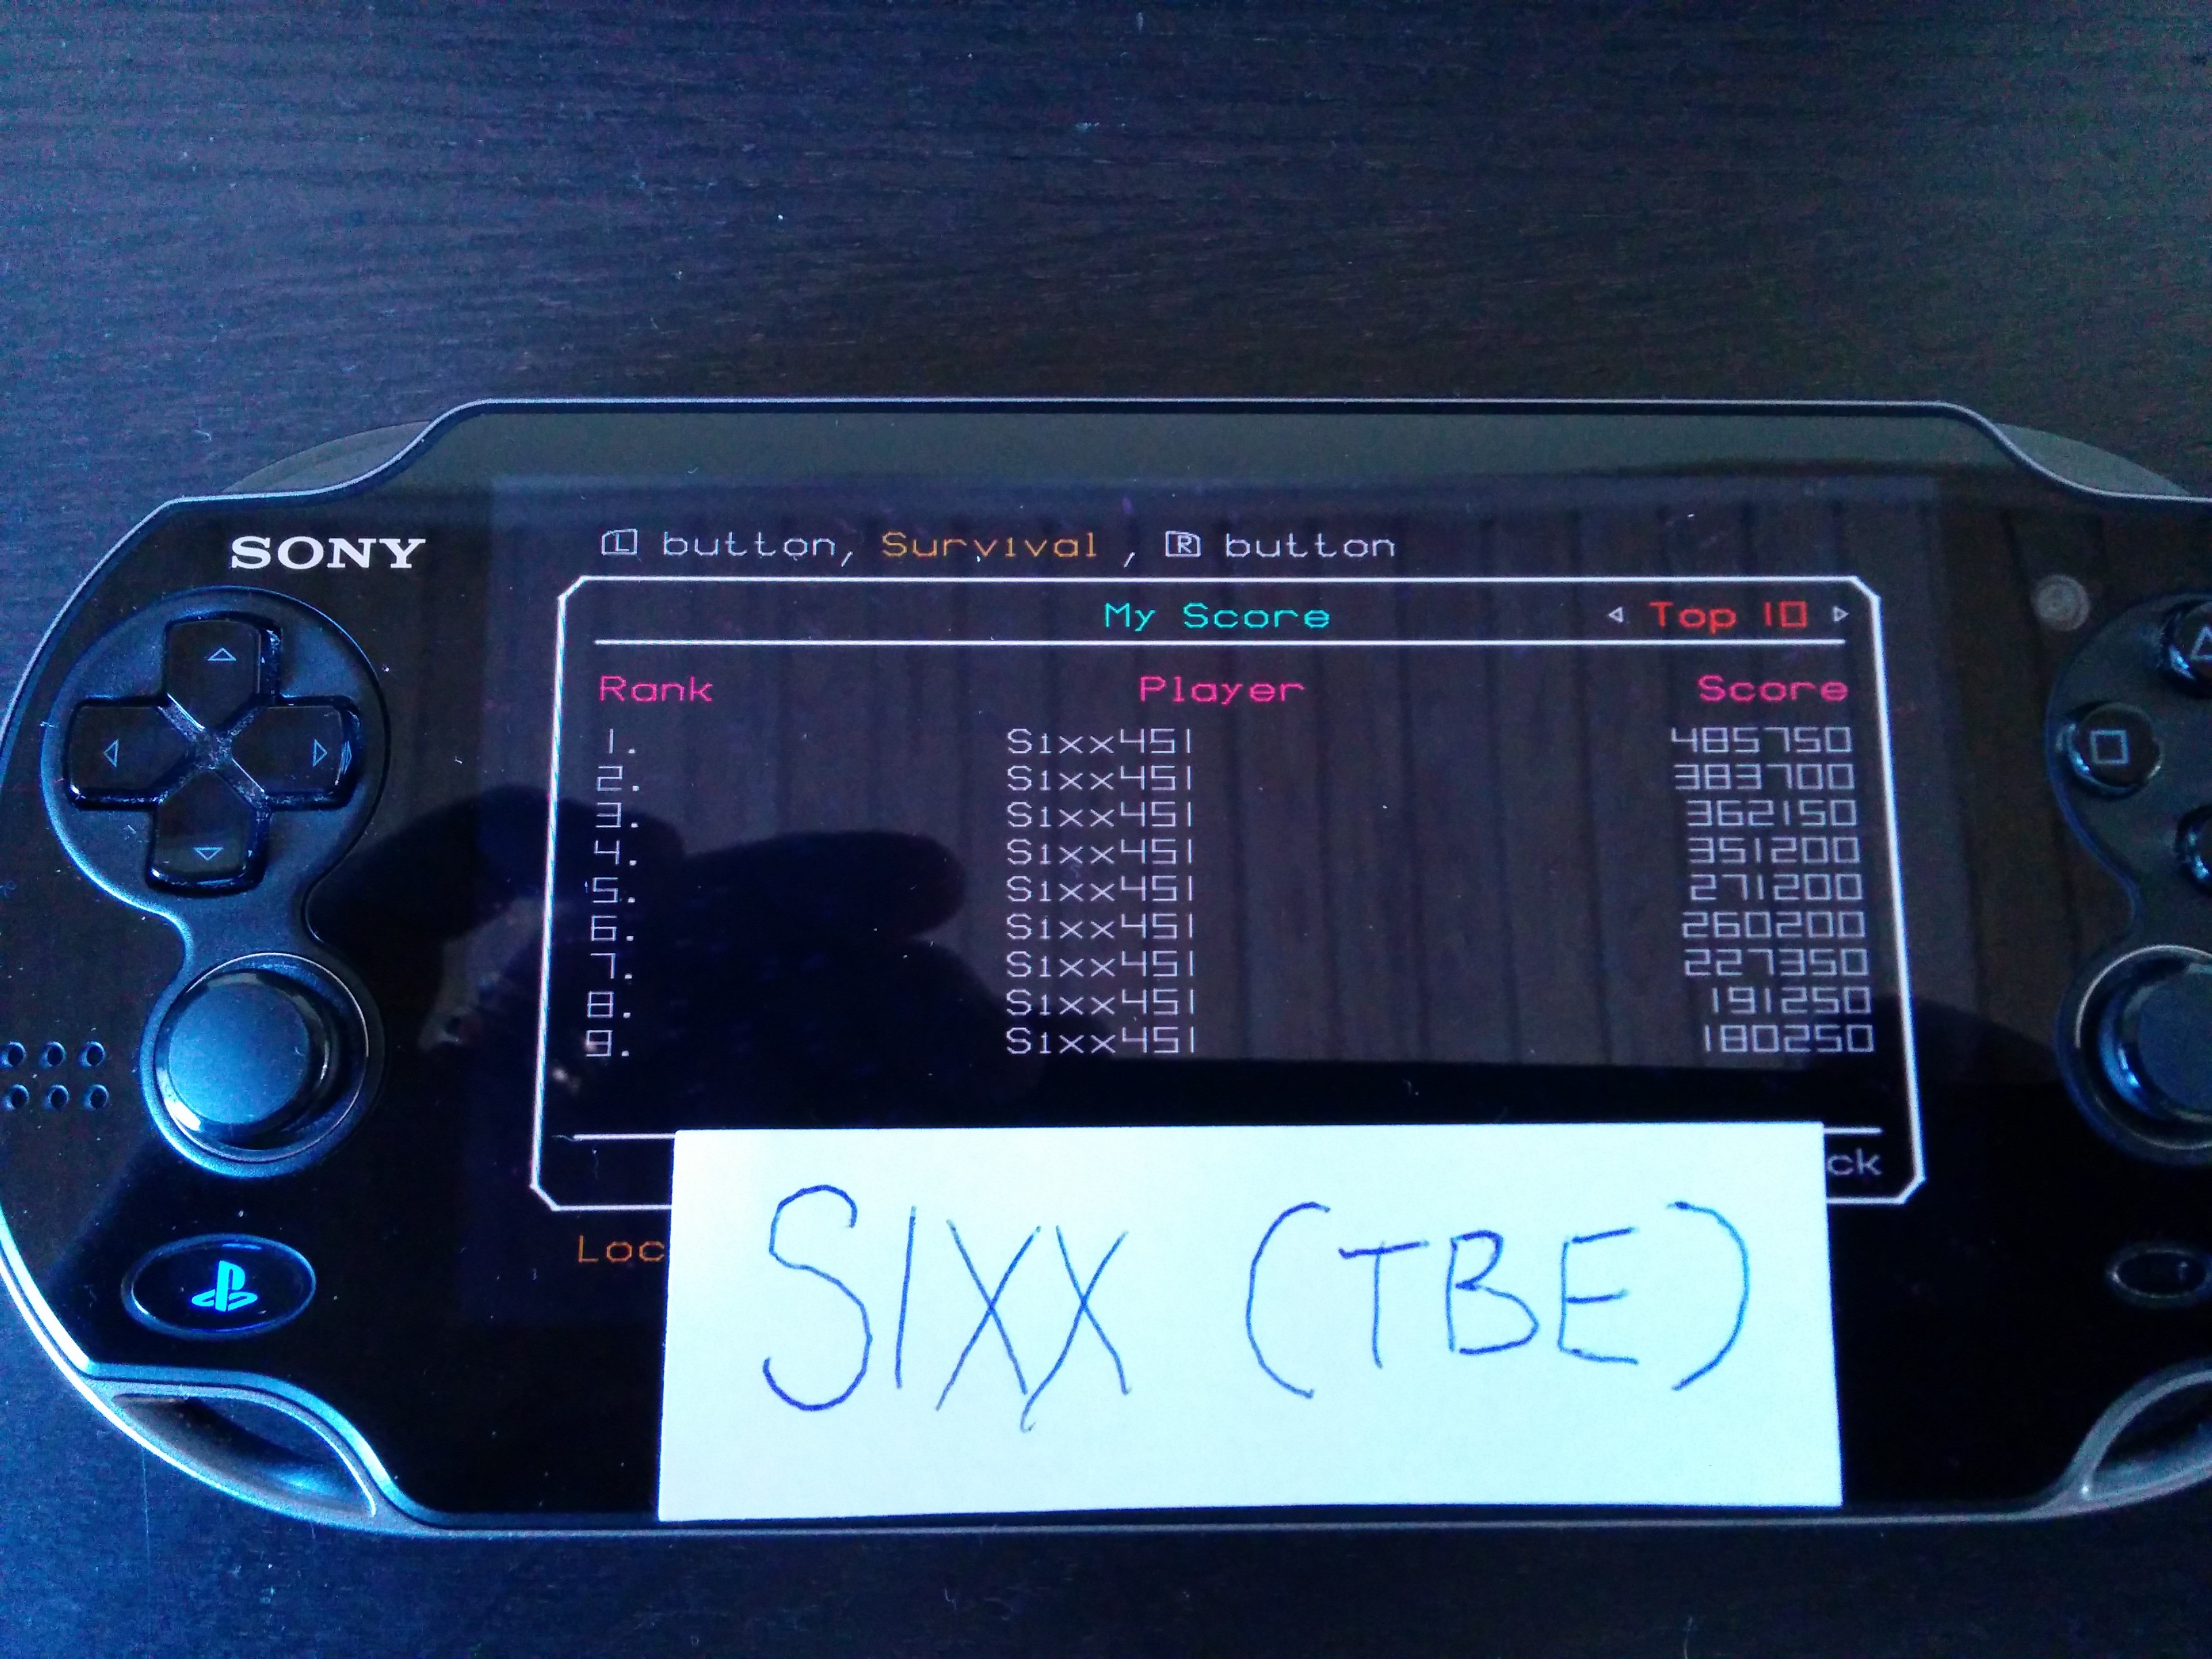 Sixx: TxK [Survival Mode] (PS Vita) 485,750 points on 2014-04-04 07:57:39